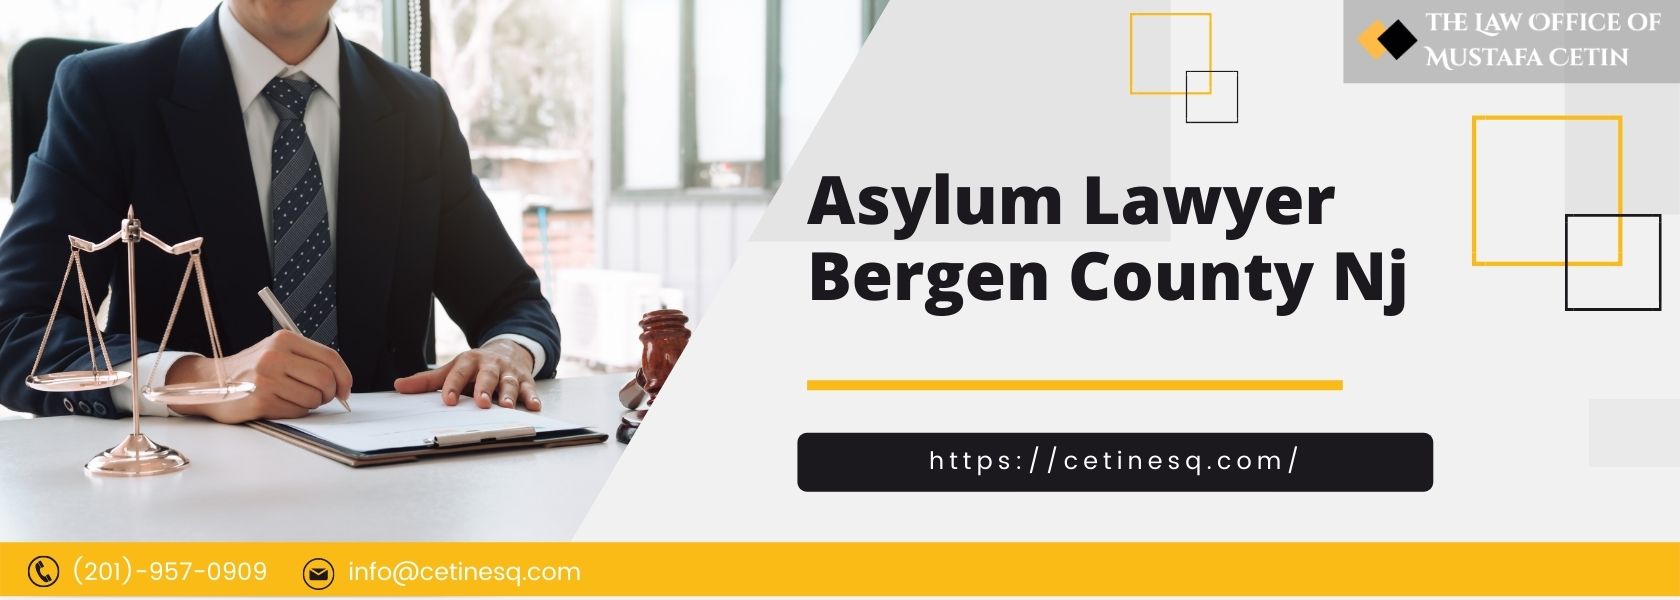 Asylum Lawyer Bergen County Nj